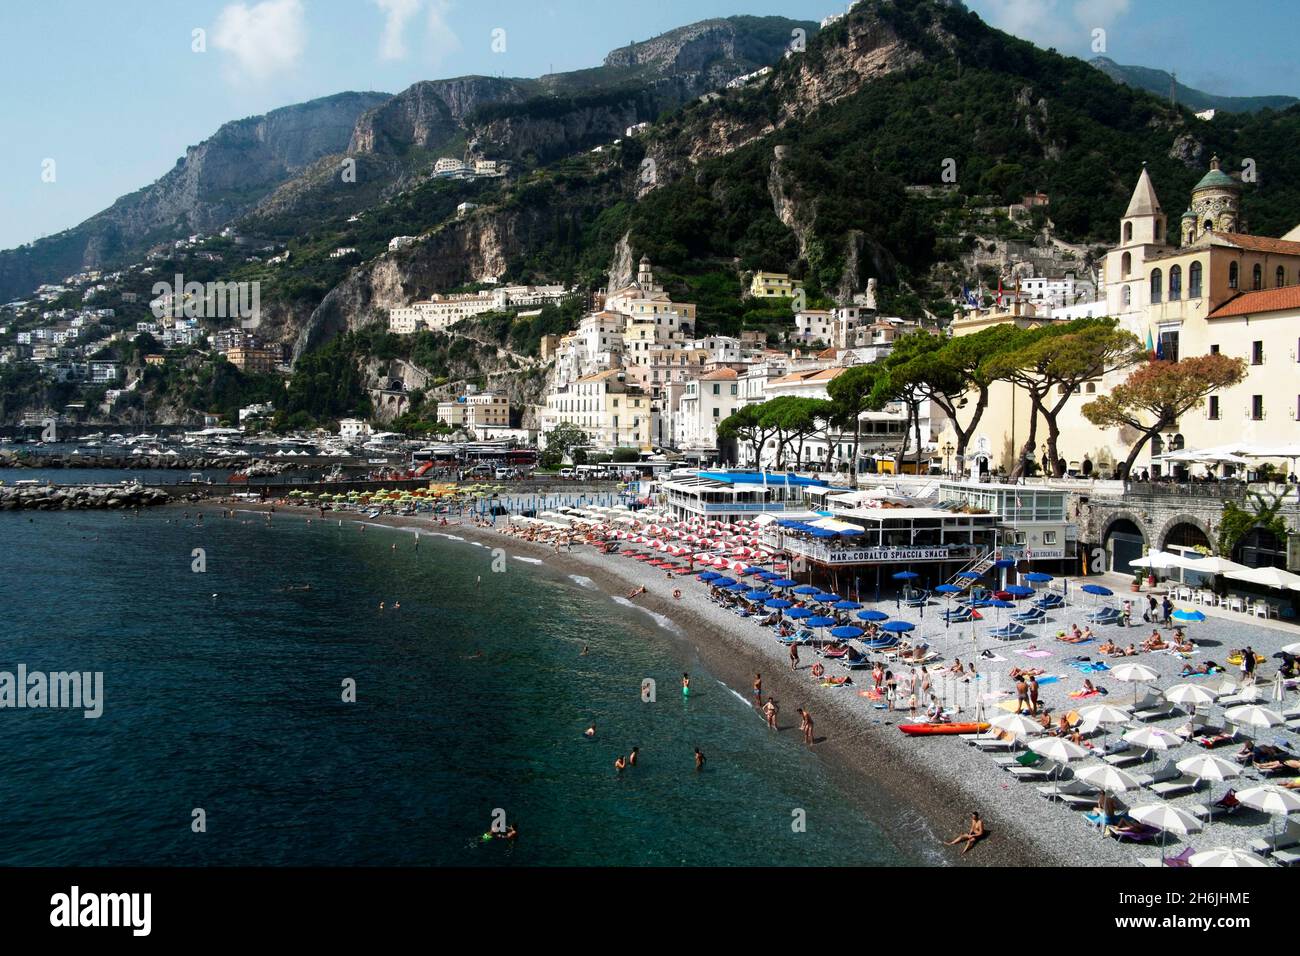 The beach, Amalfi, Costiera Amalfitana, UNESCO World Heritage Site, Campania, Italy, Europe Stock Photo